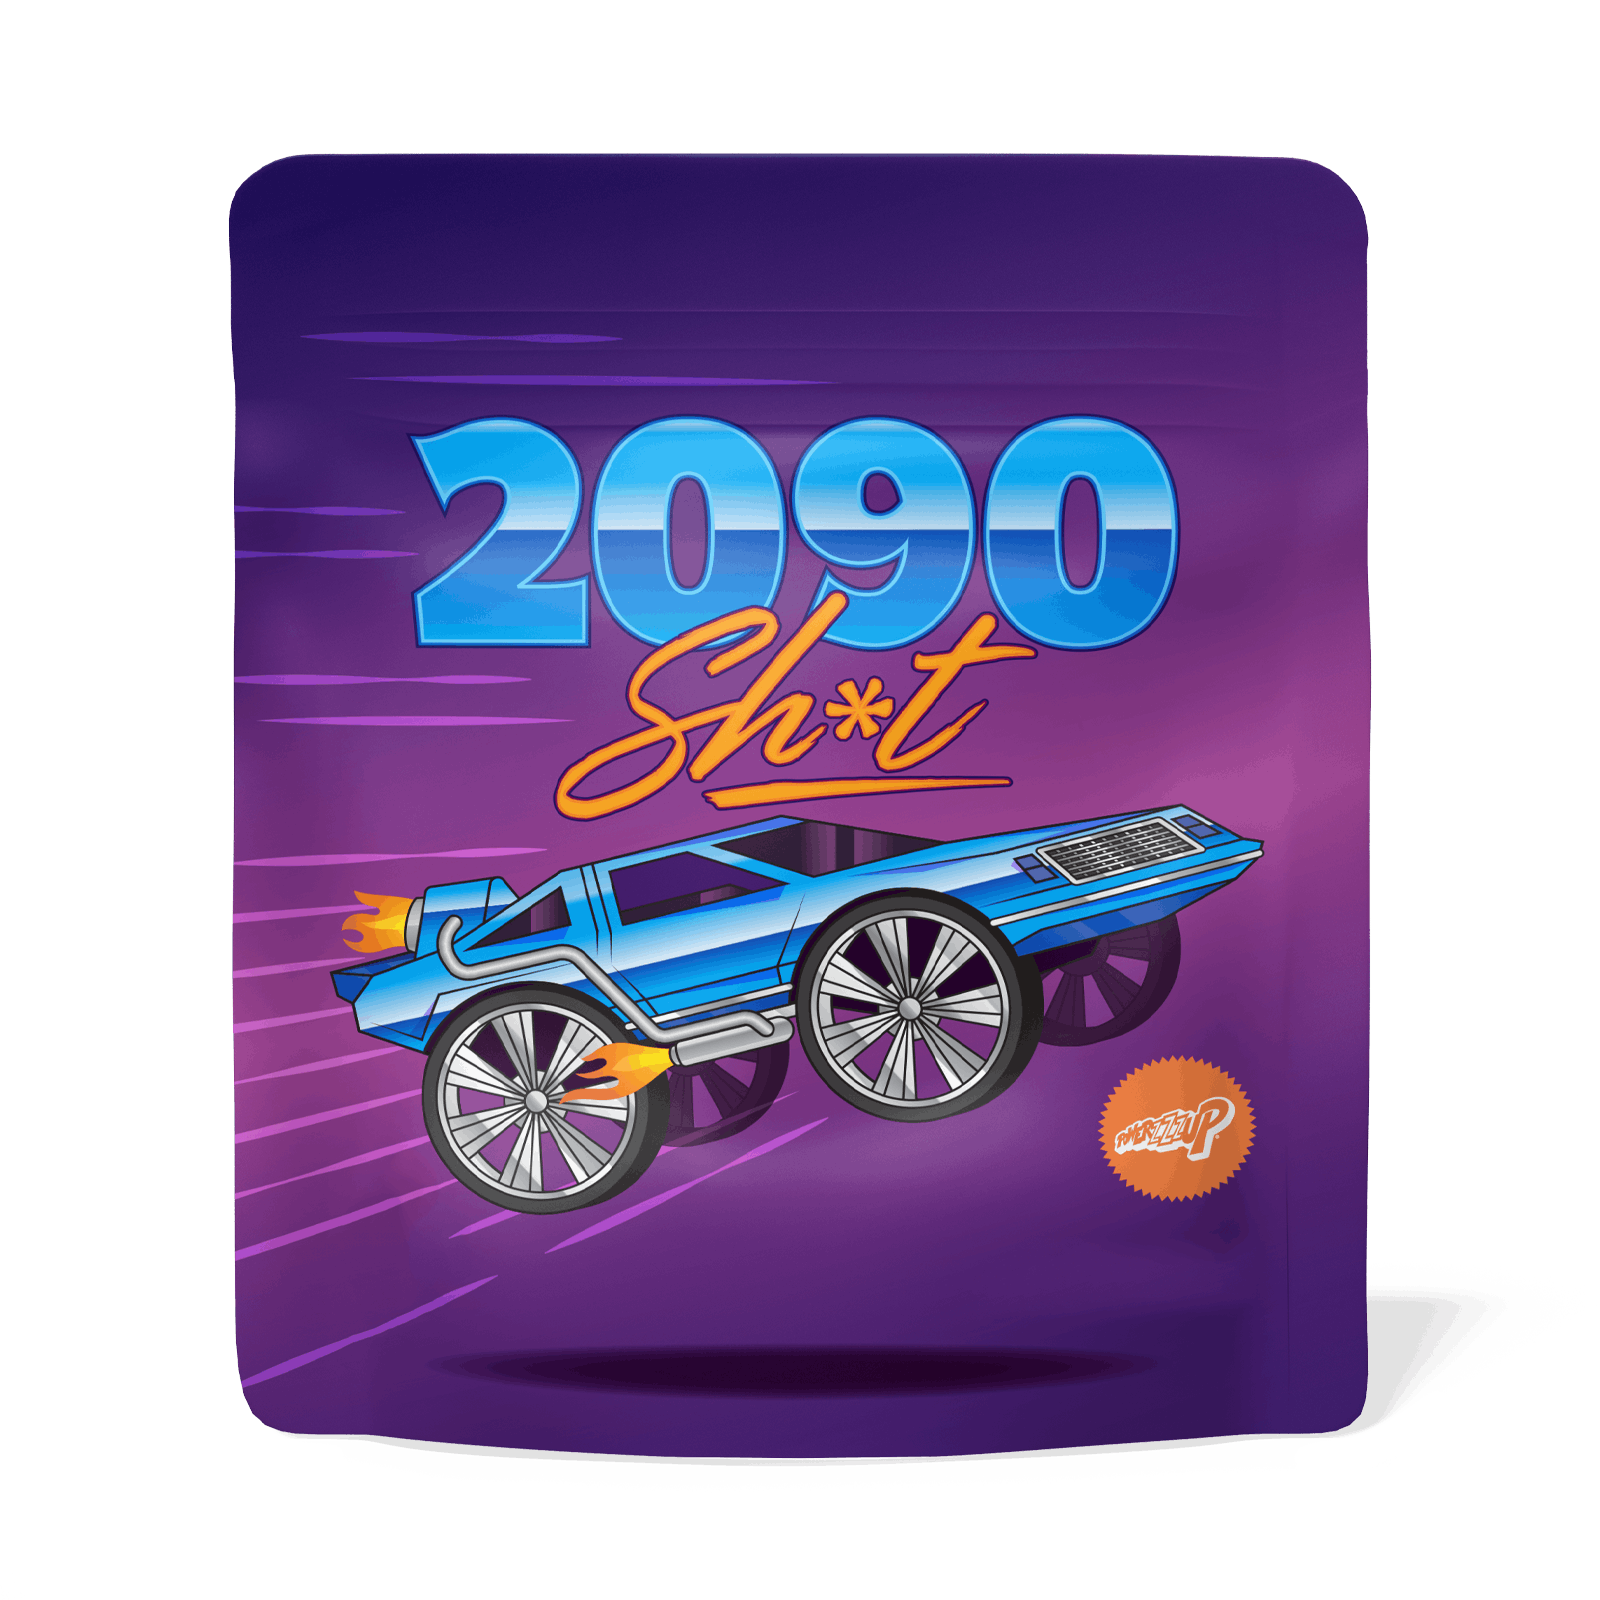 Image of 2090 Sh!t